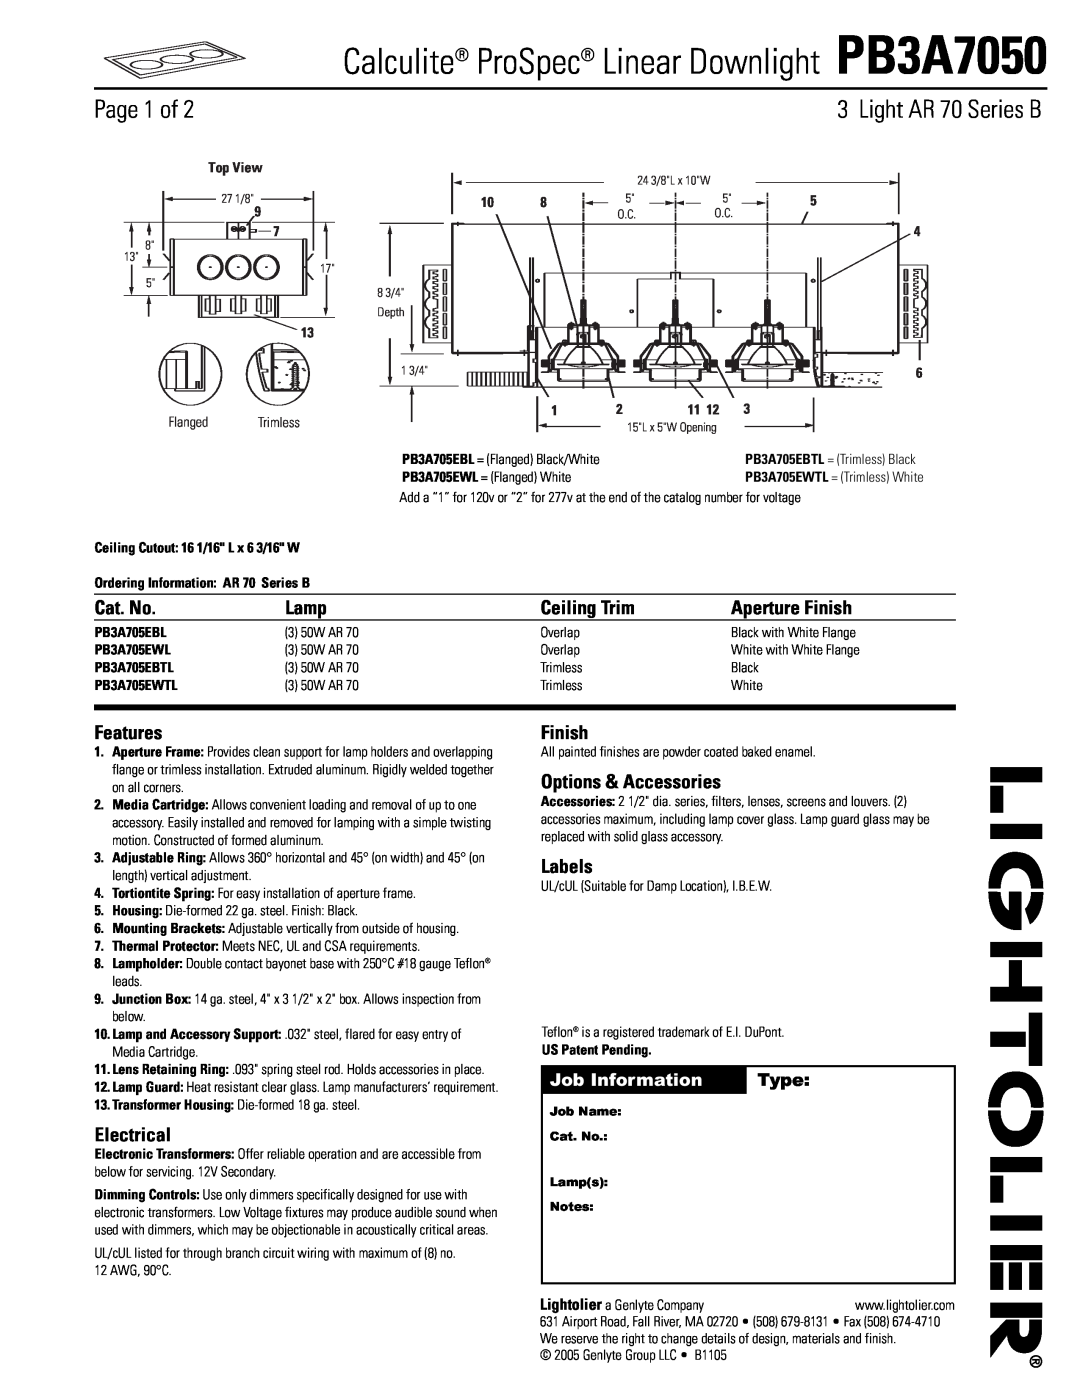 Lightolier manual Page 1 of, Type, Job Information, Calculite ProSpec Linear Downlight PB3A7050, Light AR 70 Series B 